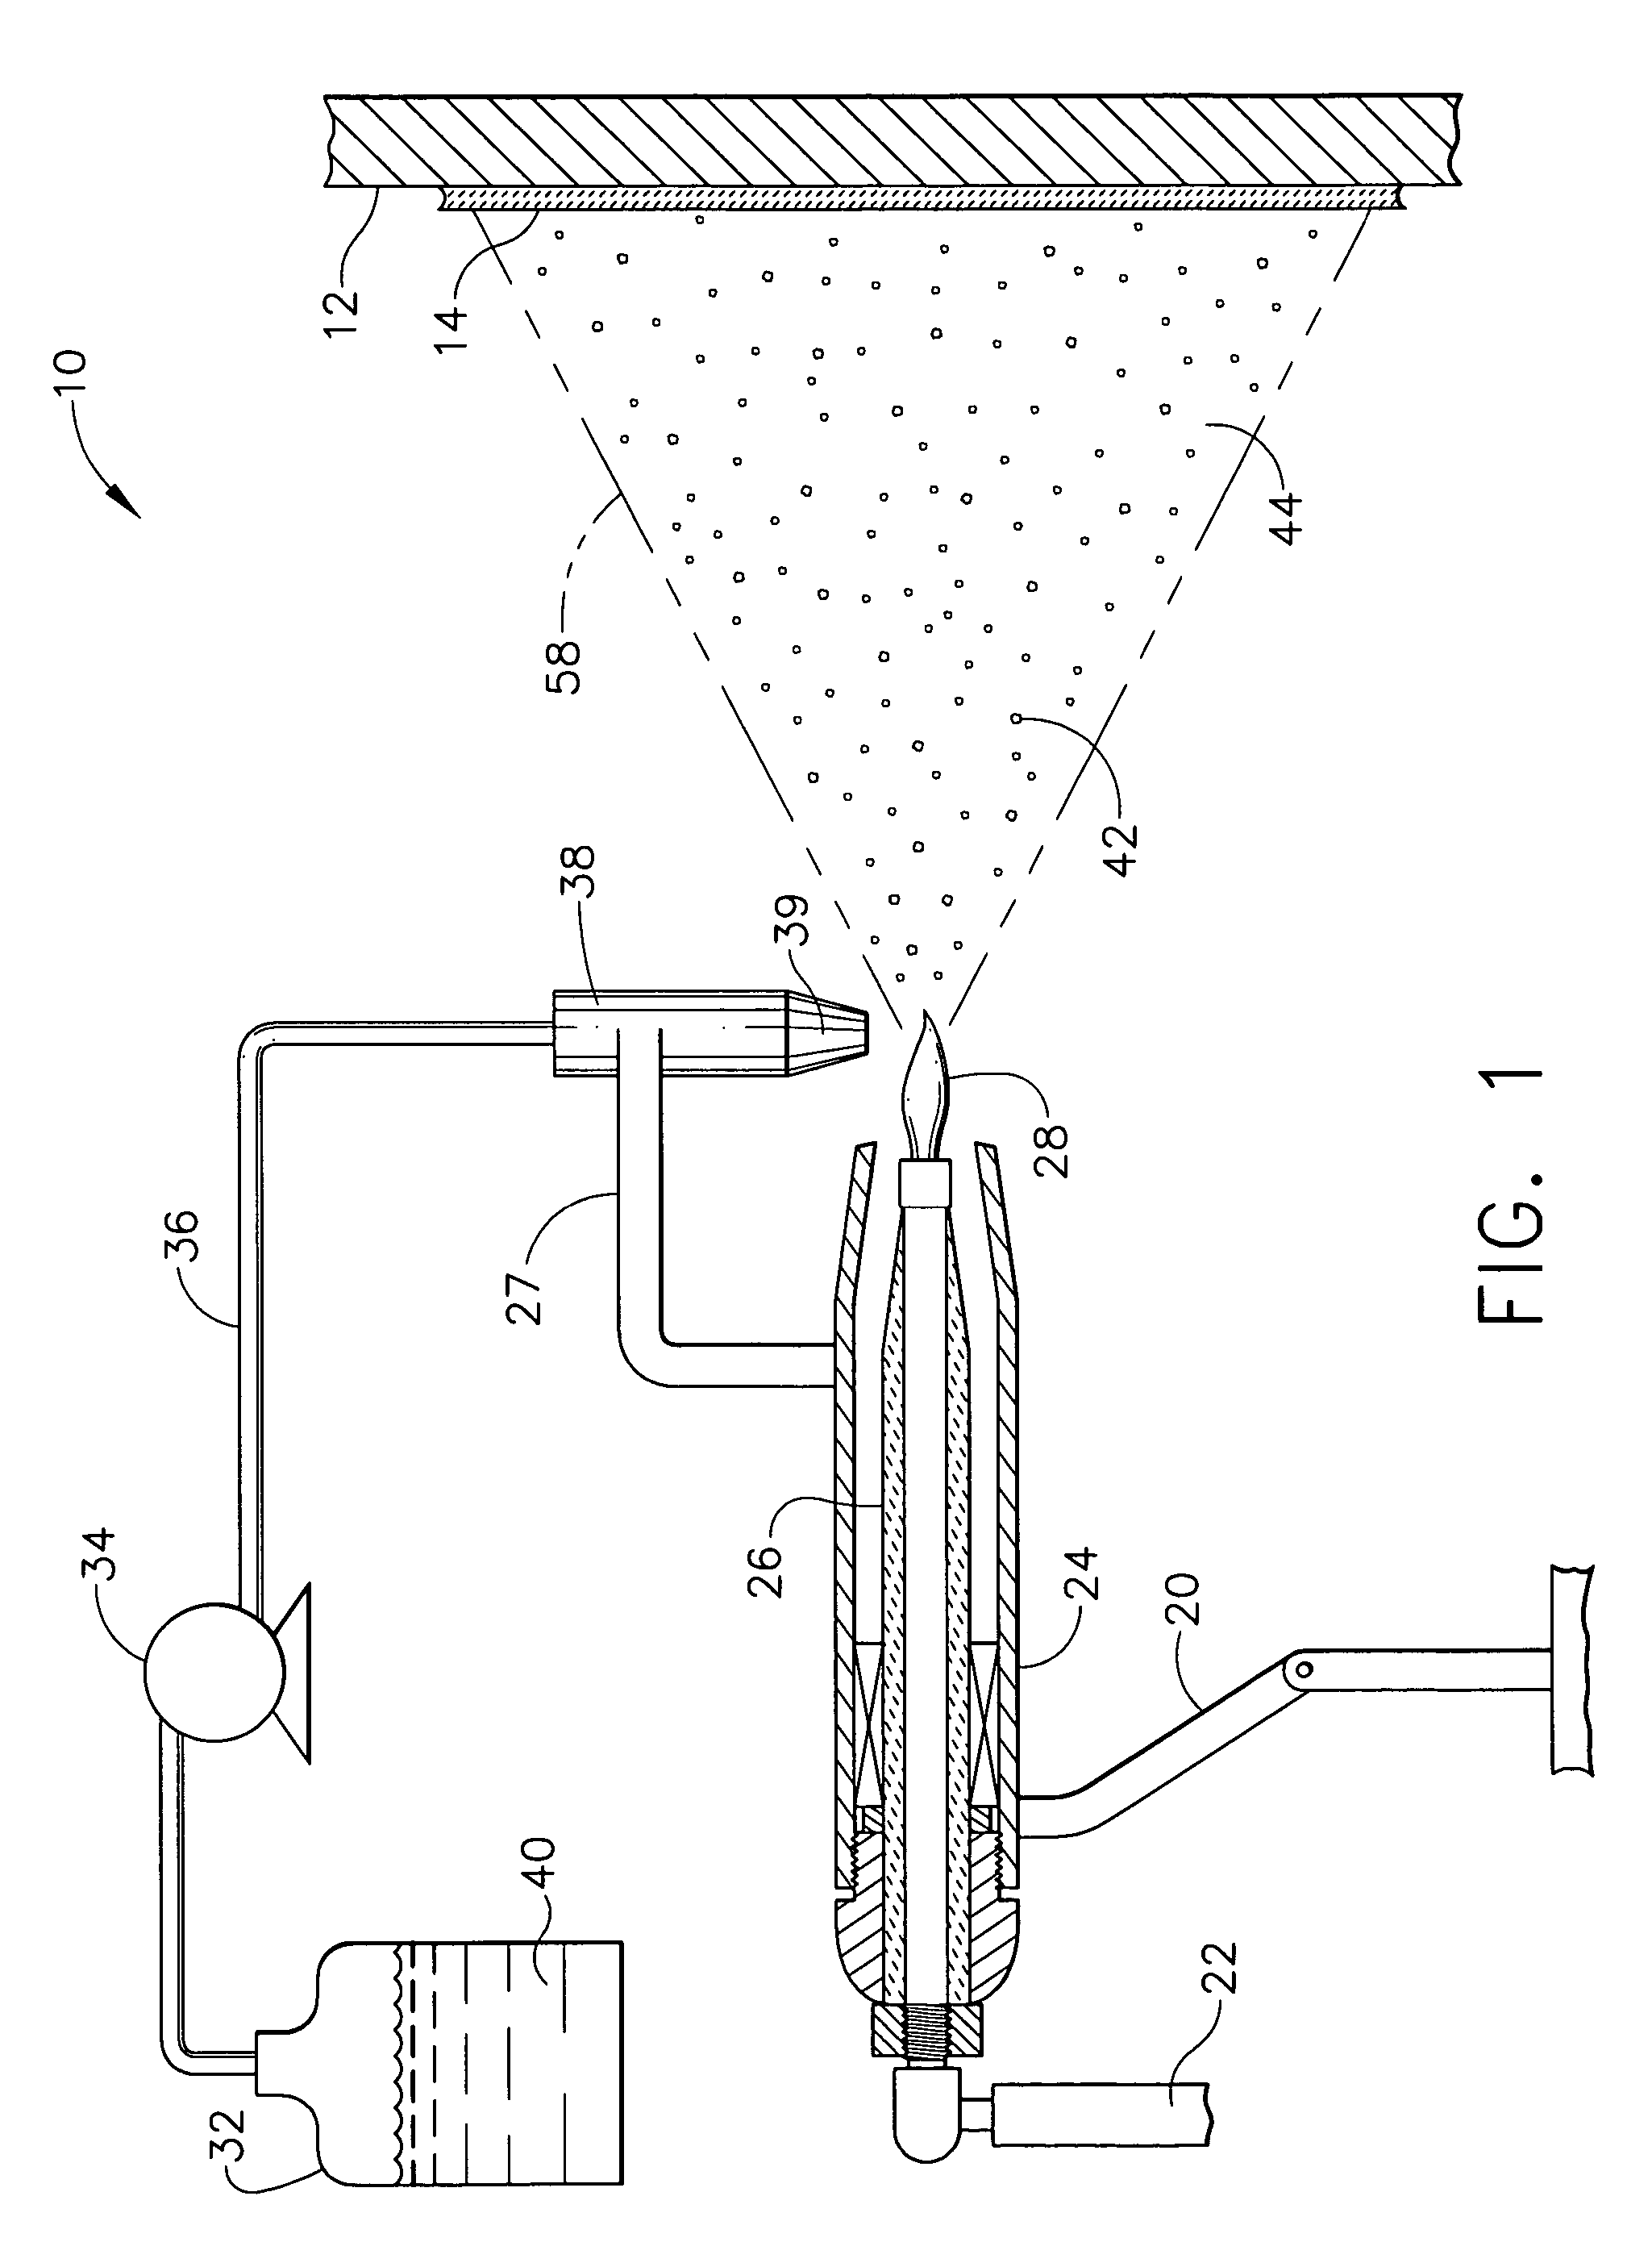 Method for applying a plasma sprayed coating using liquid injection